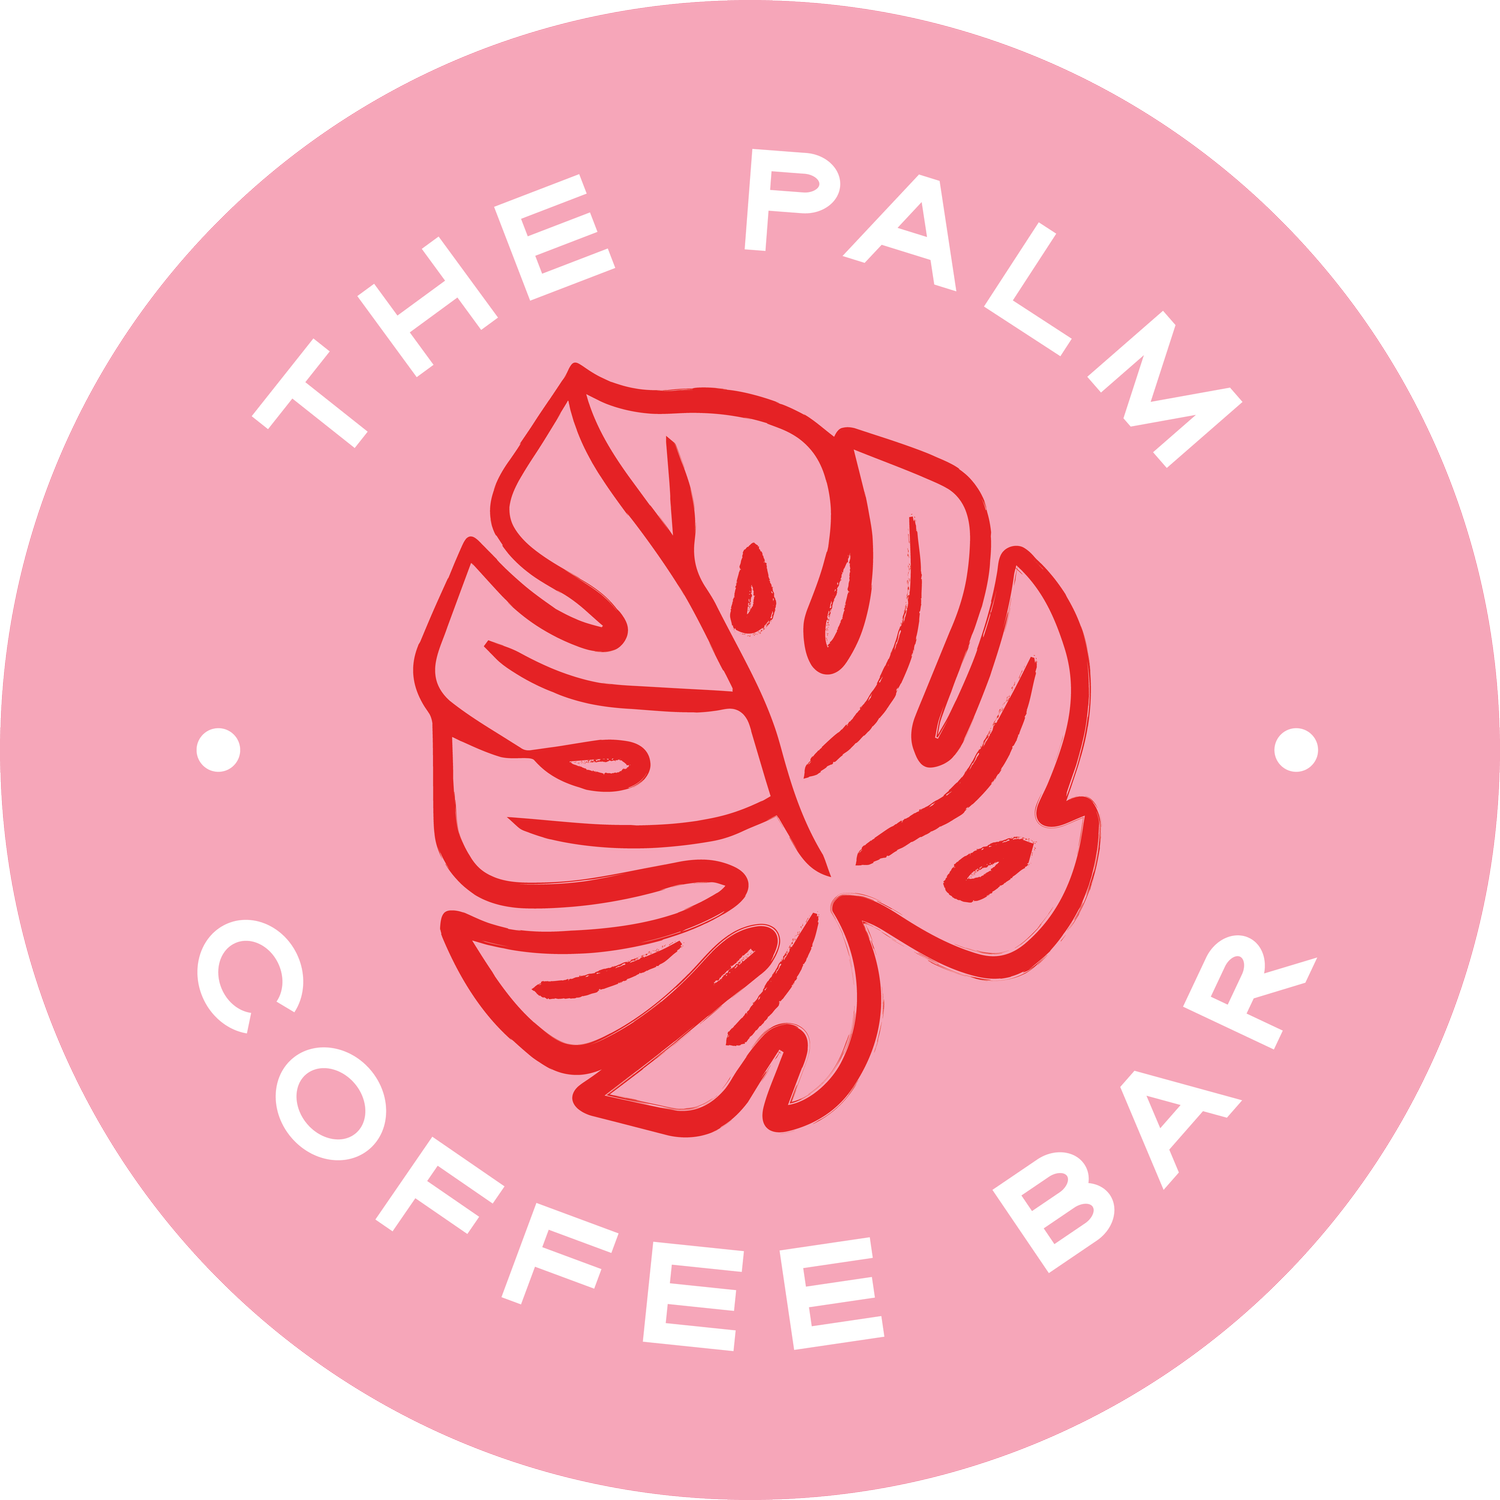 The Palm Coffee Bar